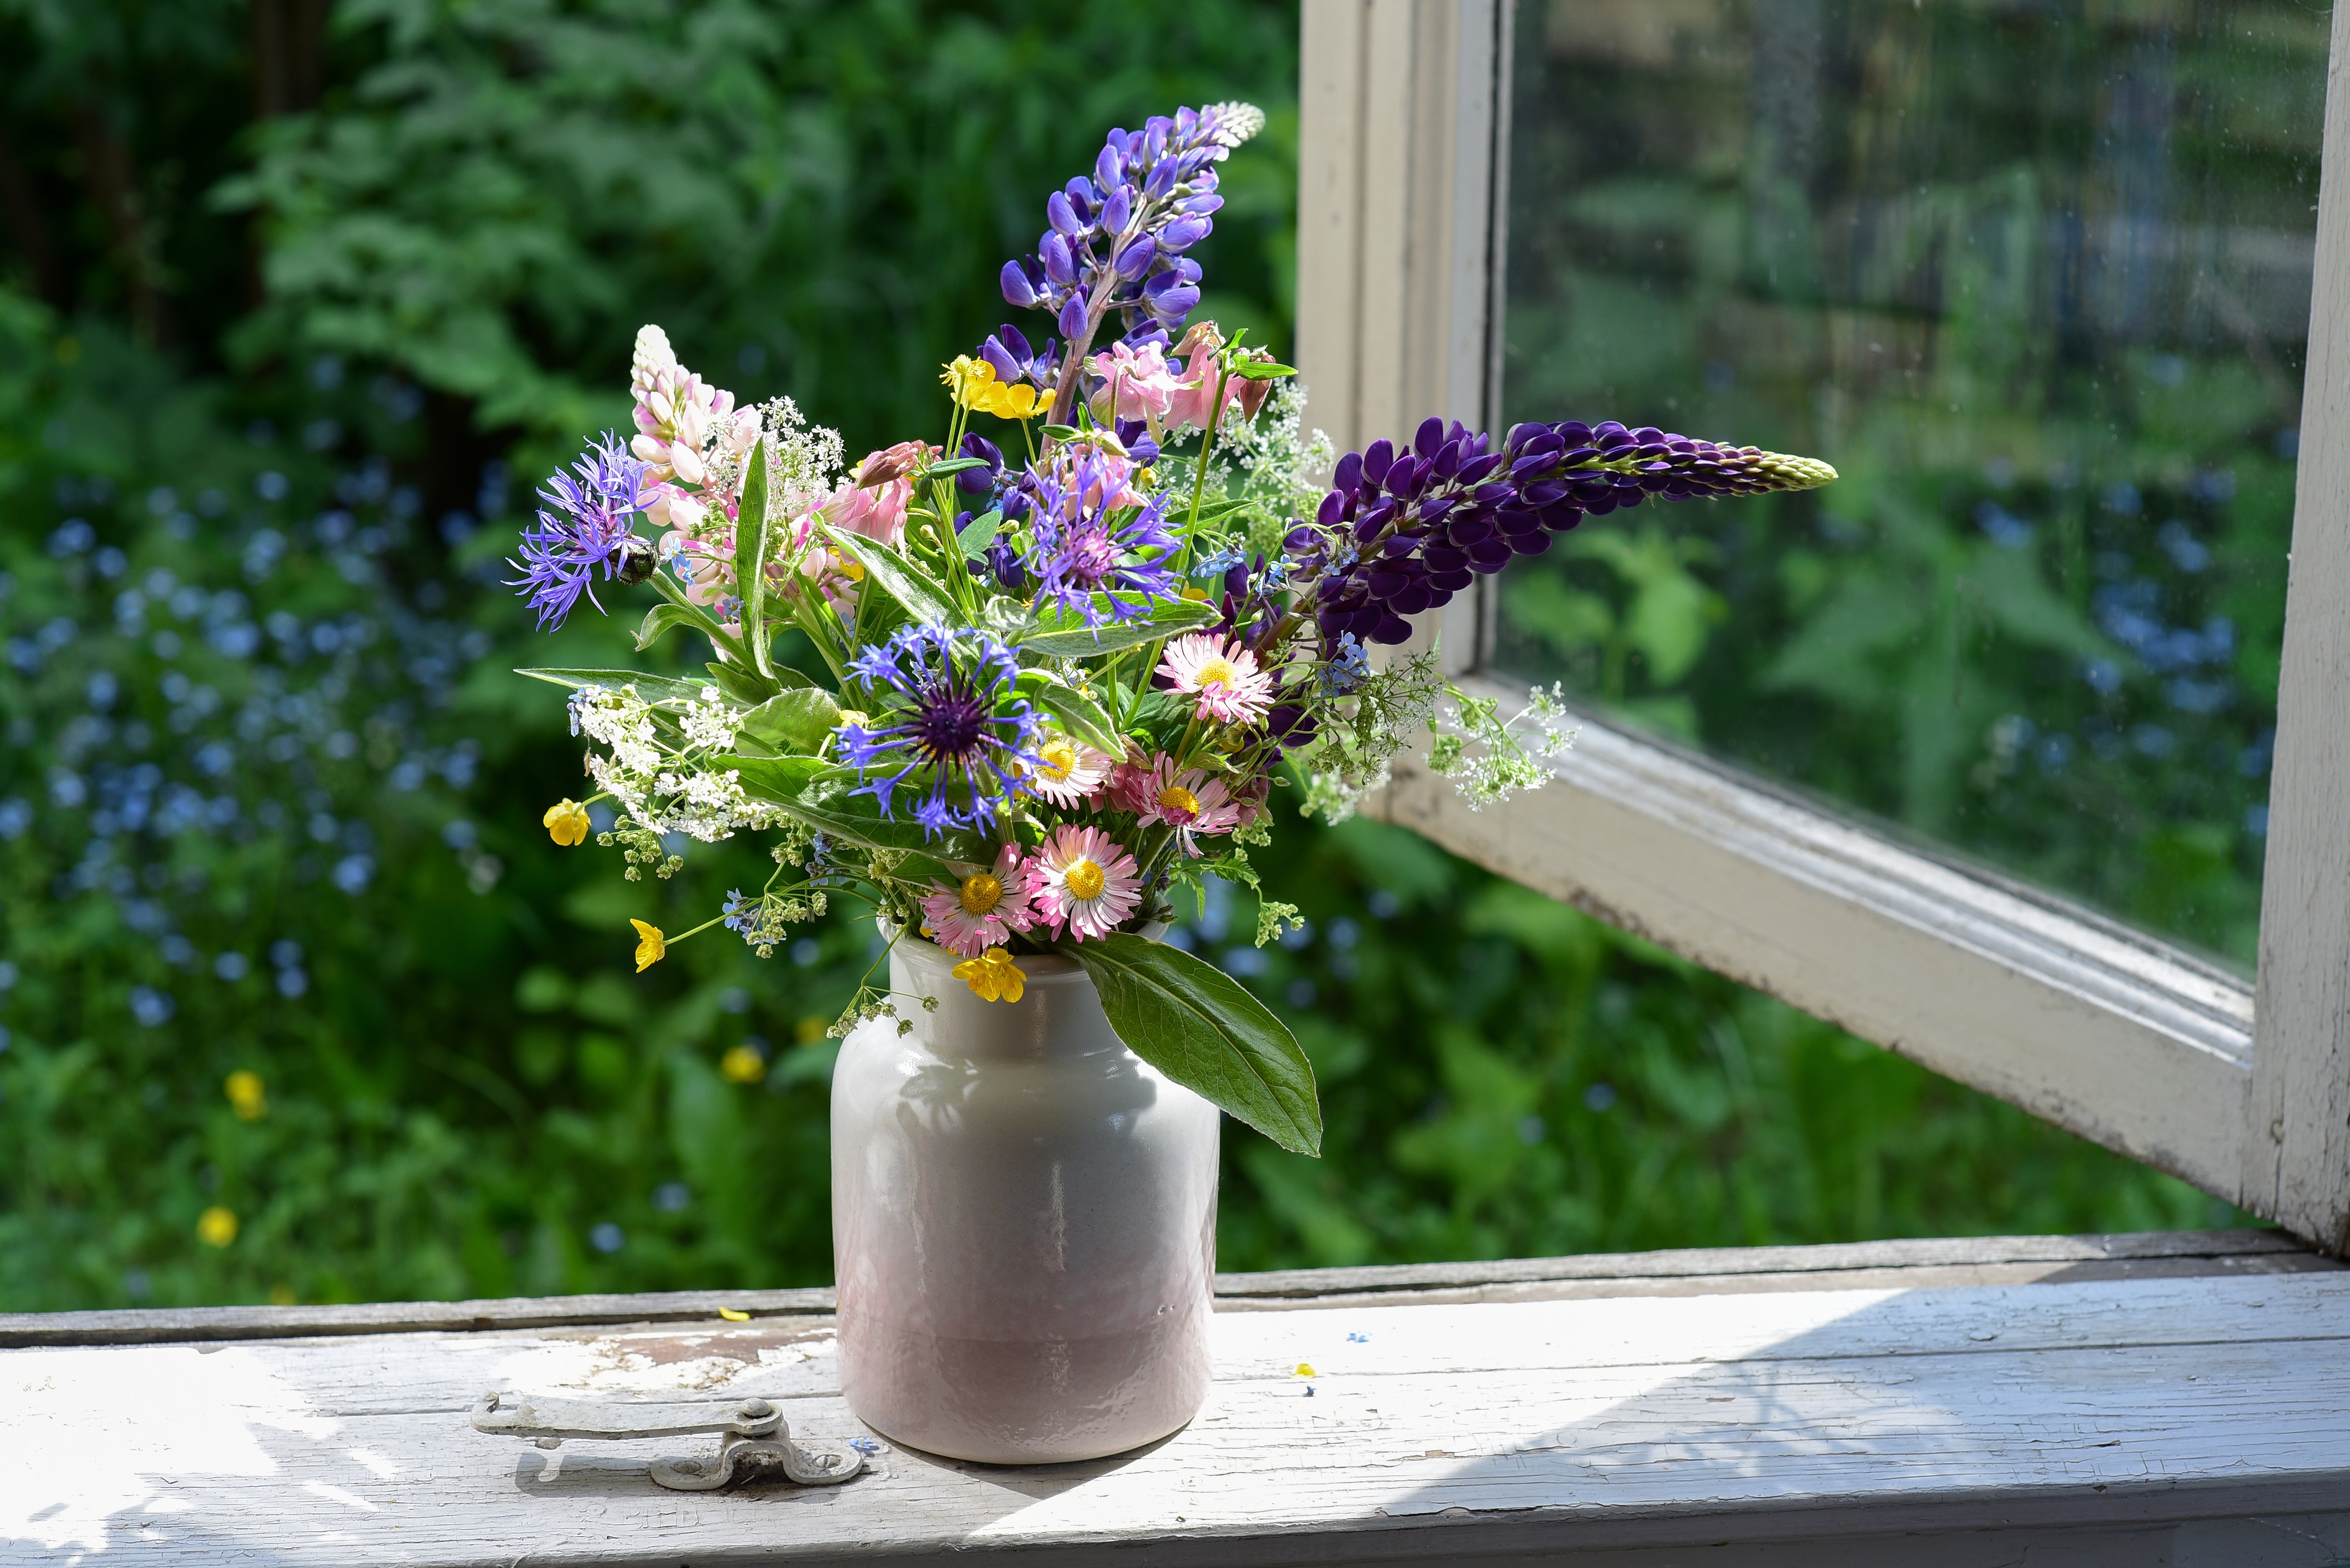 Bouquet of wild flowers in a vase on a wooden window sill | Source: Shutterstock